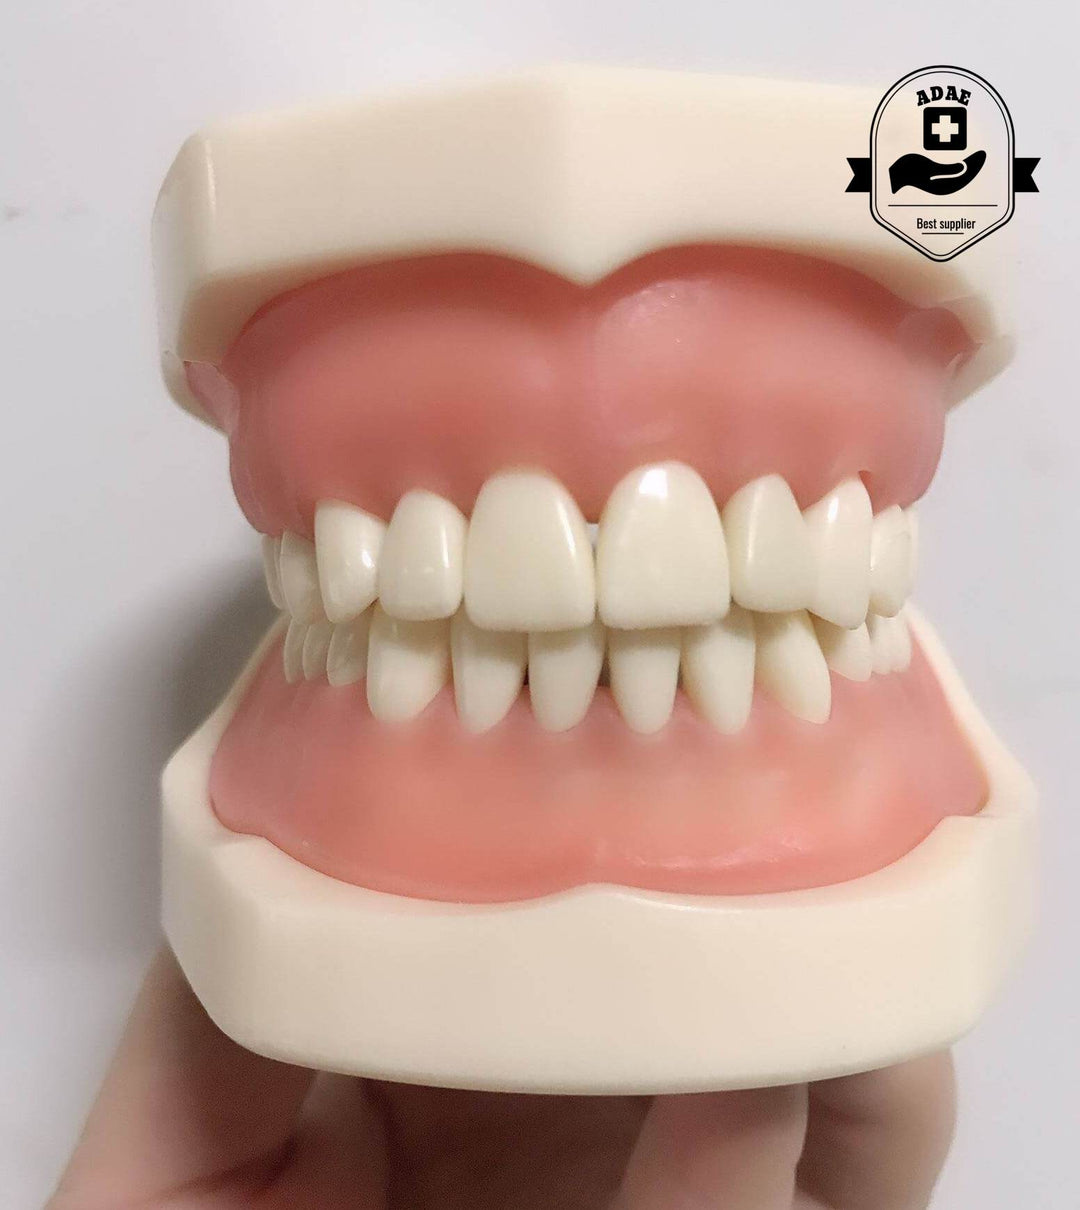 ADAE AD032 dental study model - ADAE Dental Online Store